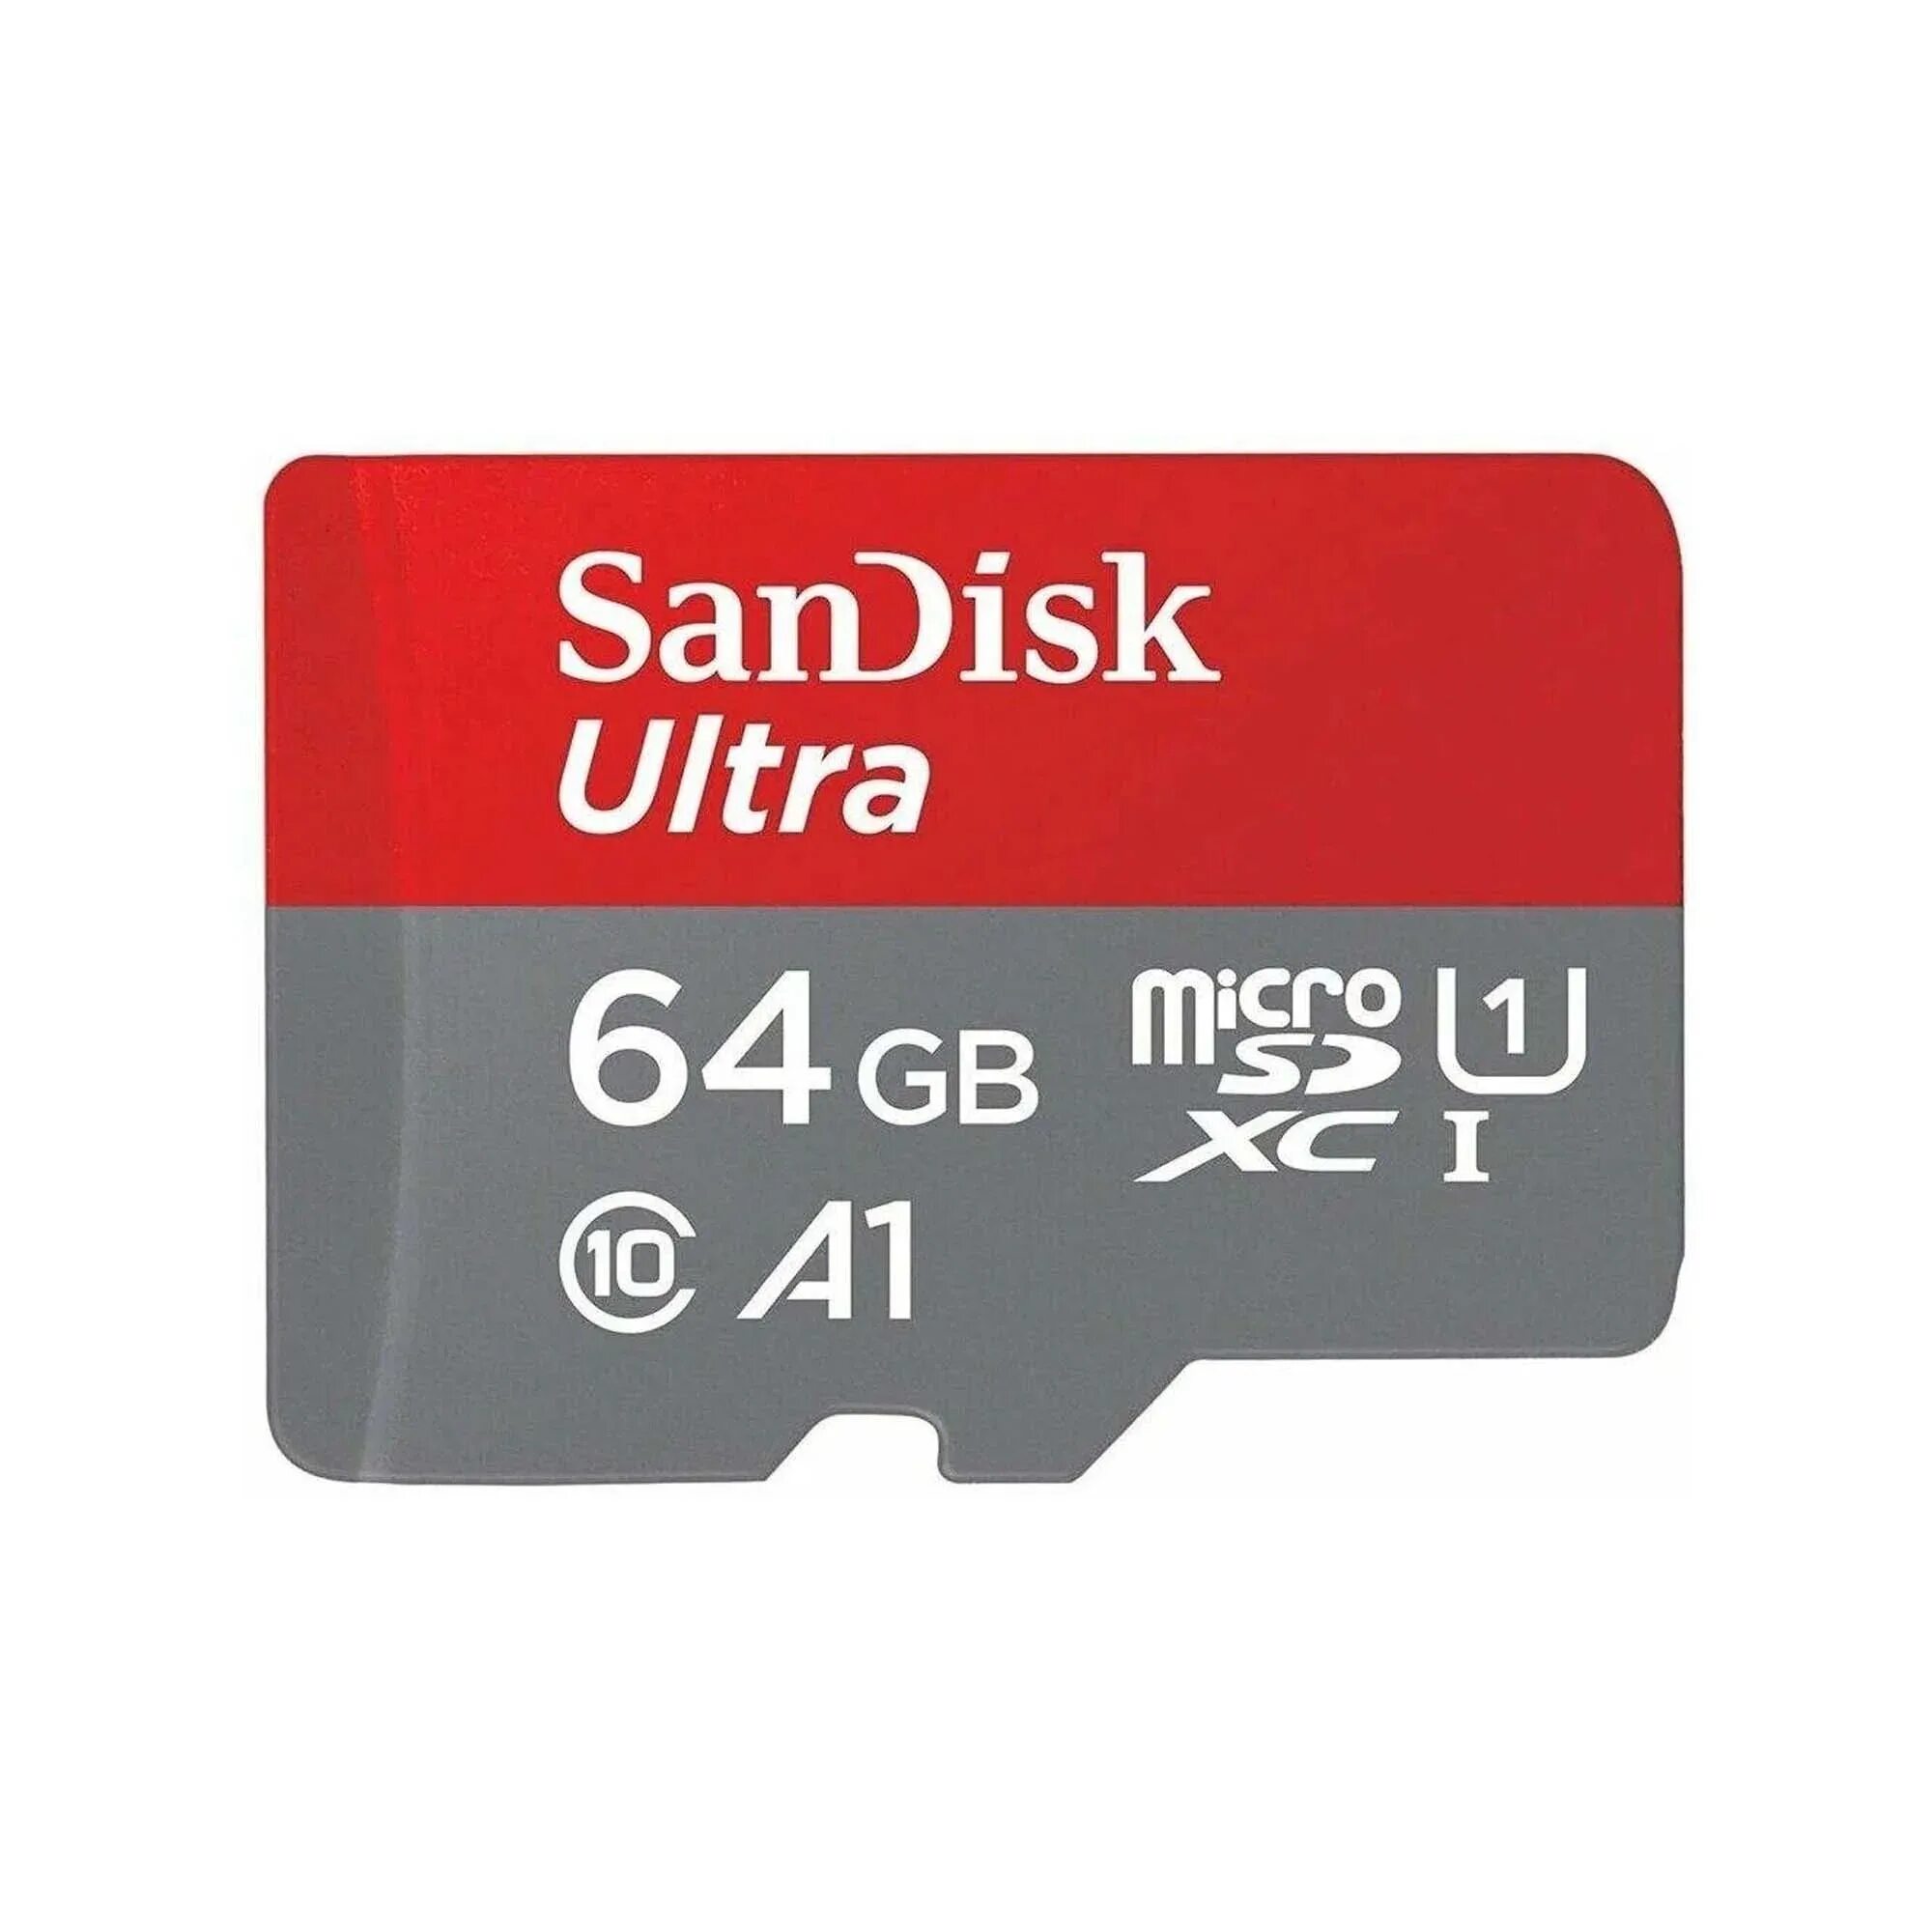 Памяти 64 128 гб. SANDISK 64gb extreme MICROSD. SANDISK Ultra 128gb. SANDISK карта extreme MICROSD 128gb. Флешка SD 64 ГБ SANDISK.